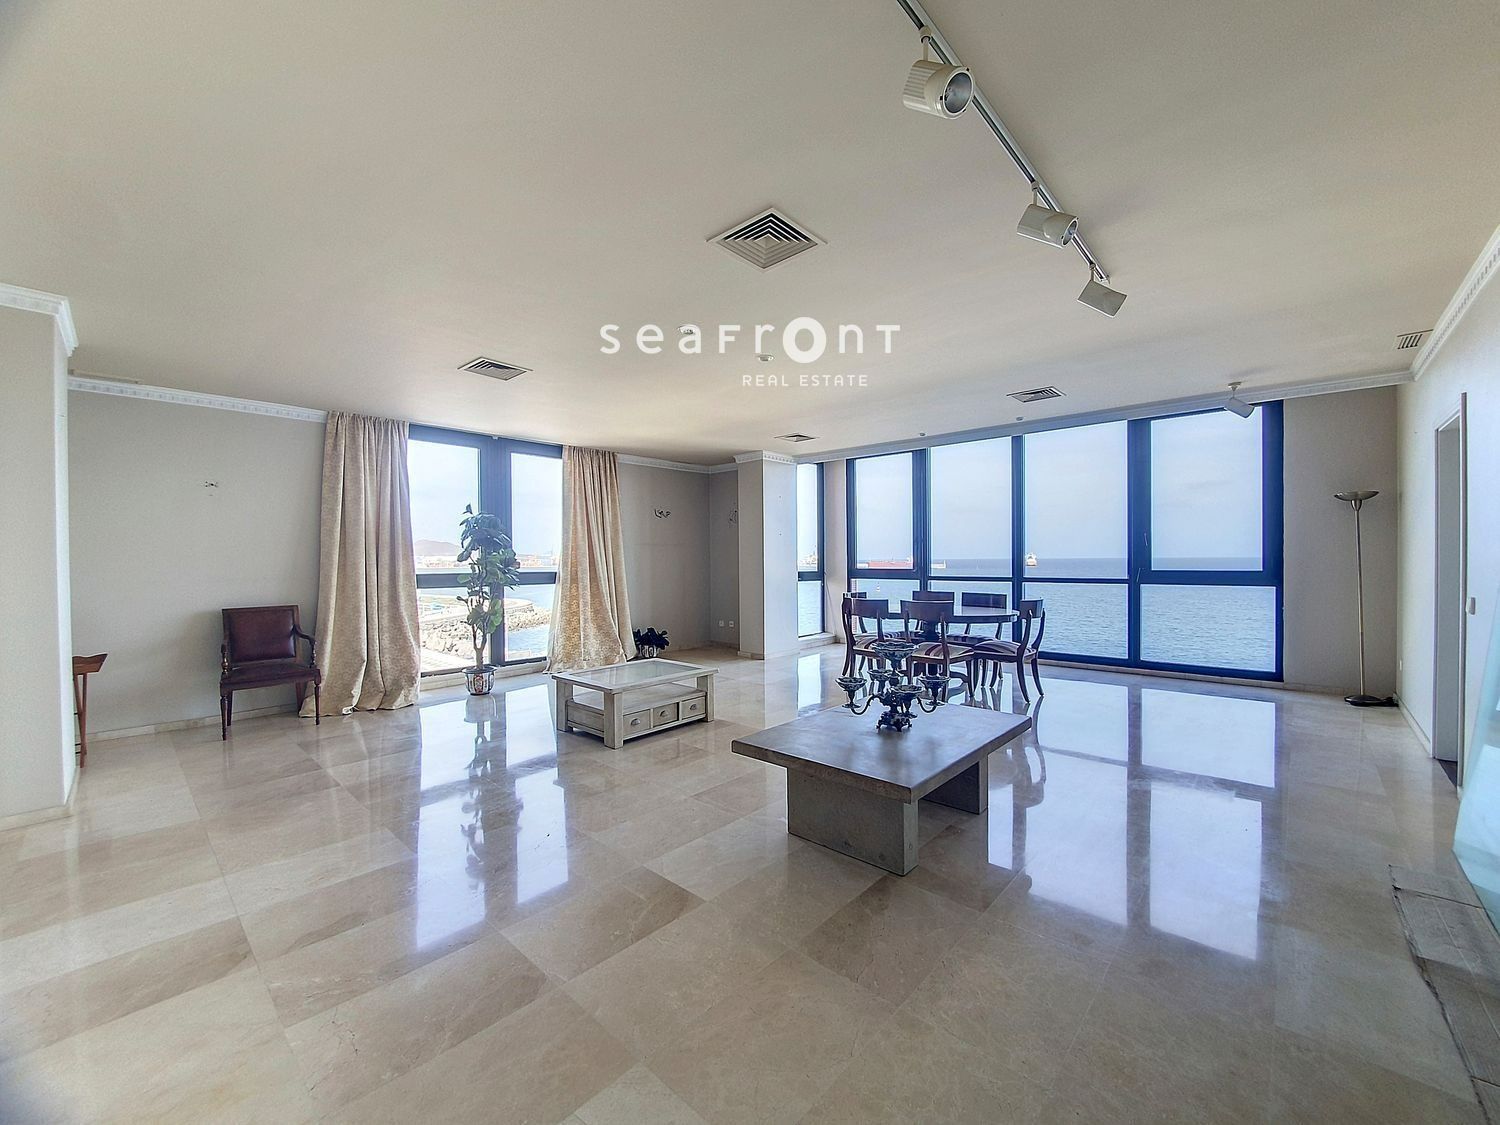 Apartment for sale on the seafront in Avenida Maritim, Las Palmas Pis en venda a primera línia de mar a Avenida Maritim, Las Palmas de Gran Canaria